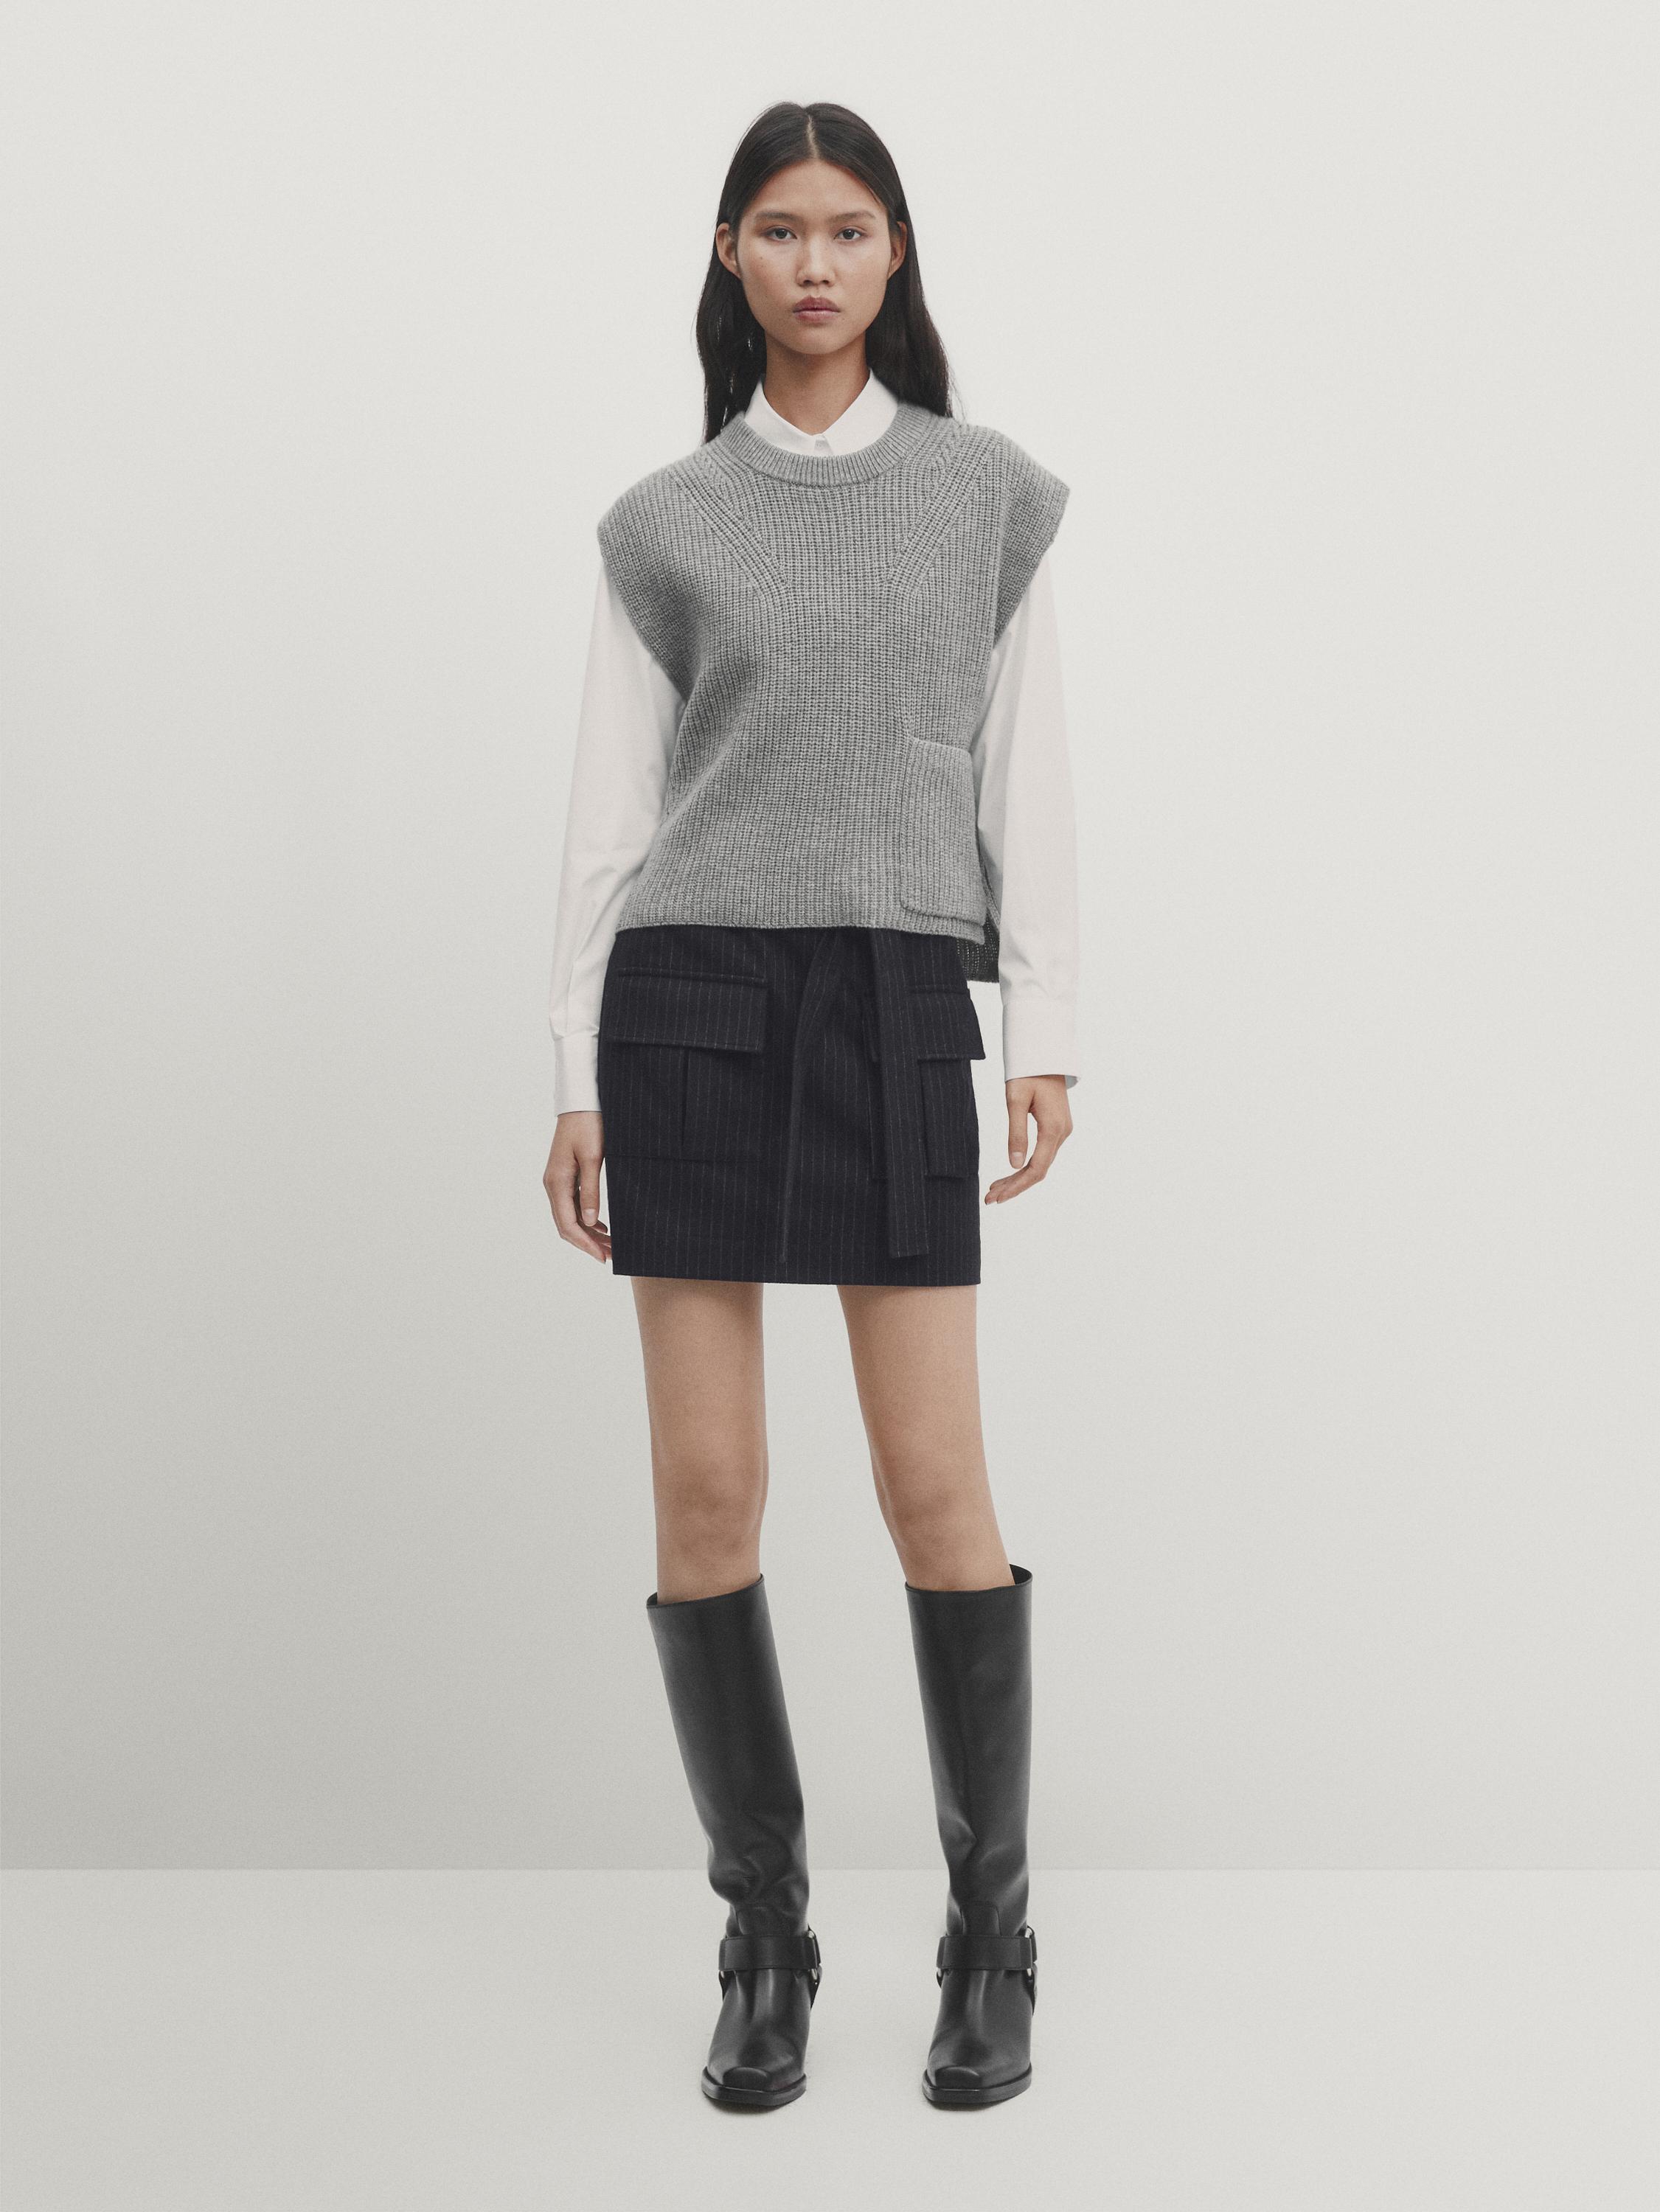 Pinstriped mini skirt with pockets - Studio - Navy blue | ZARA Canada